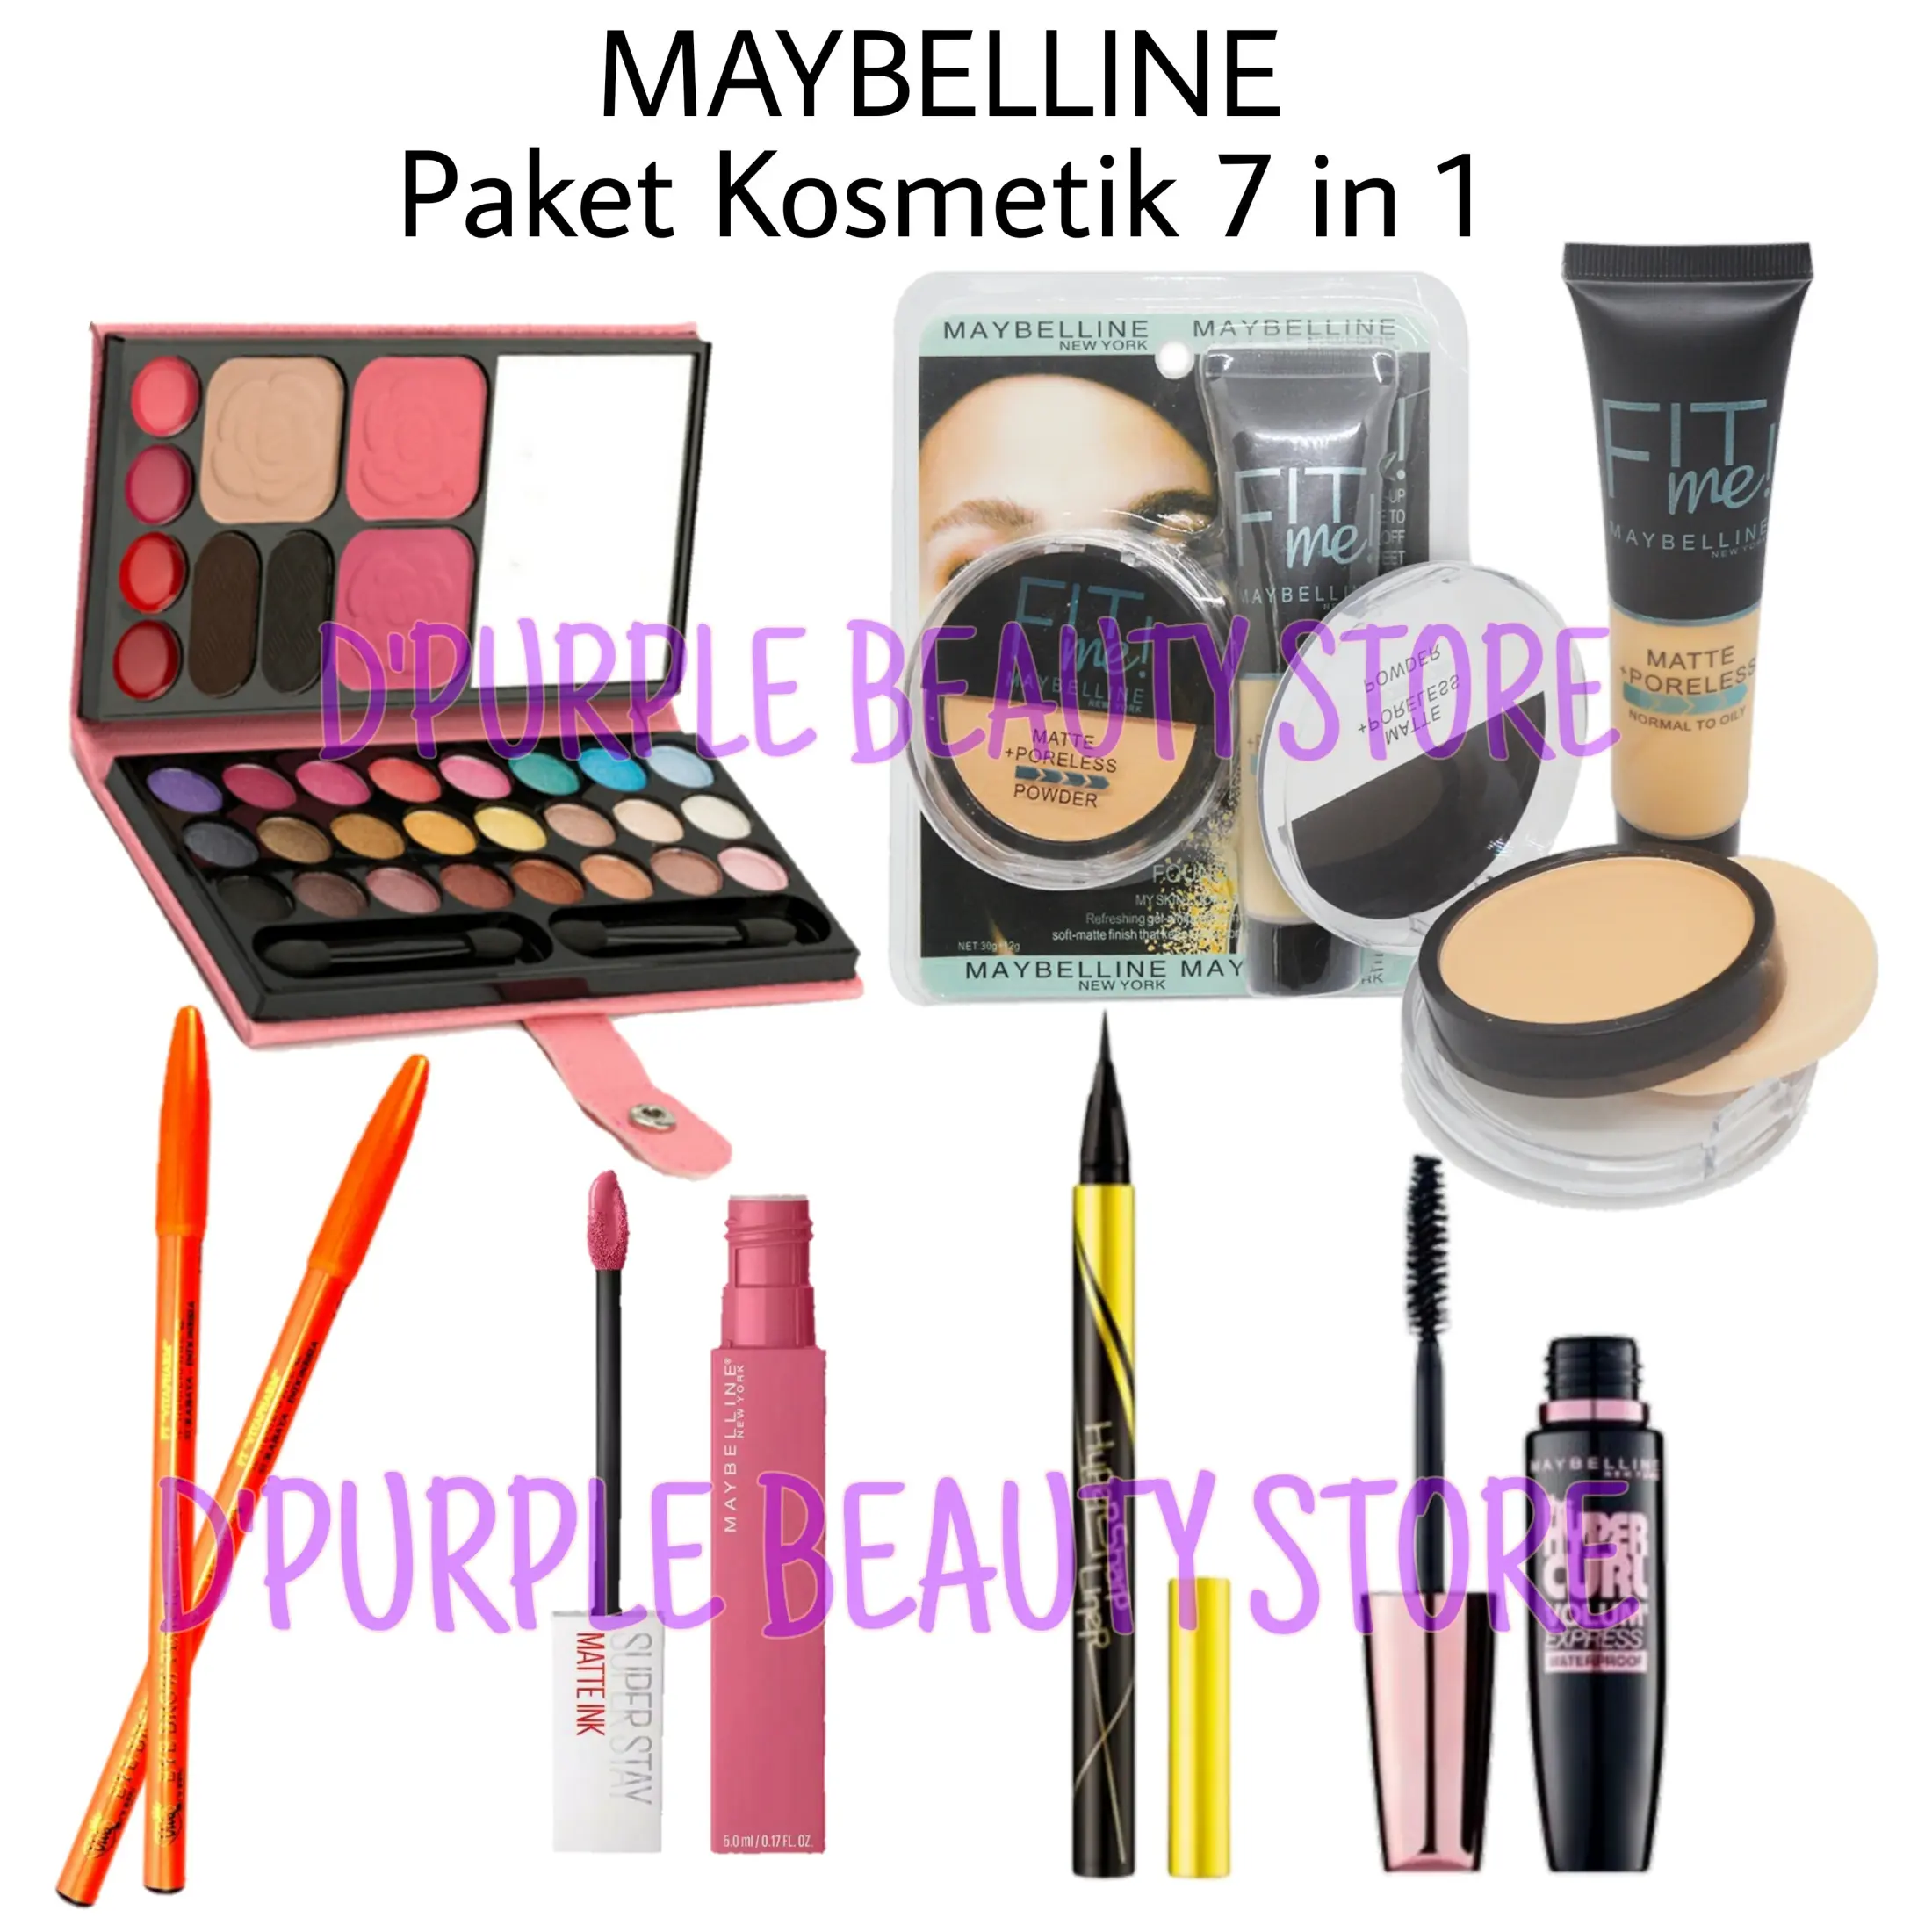 Paket Kosmetik Wanita Super Lengkap Murah 7 in 1 - Paket Make Up Lengkap  Maybelline 7 in 1 - Bedak - Fondation - Eyeshadow - Maskara - Eyeliner -  Lipcream - Pensil Alis | Lazada Indonesia